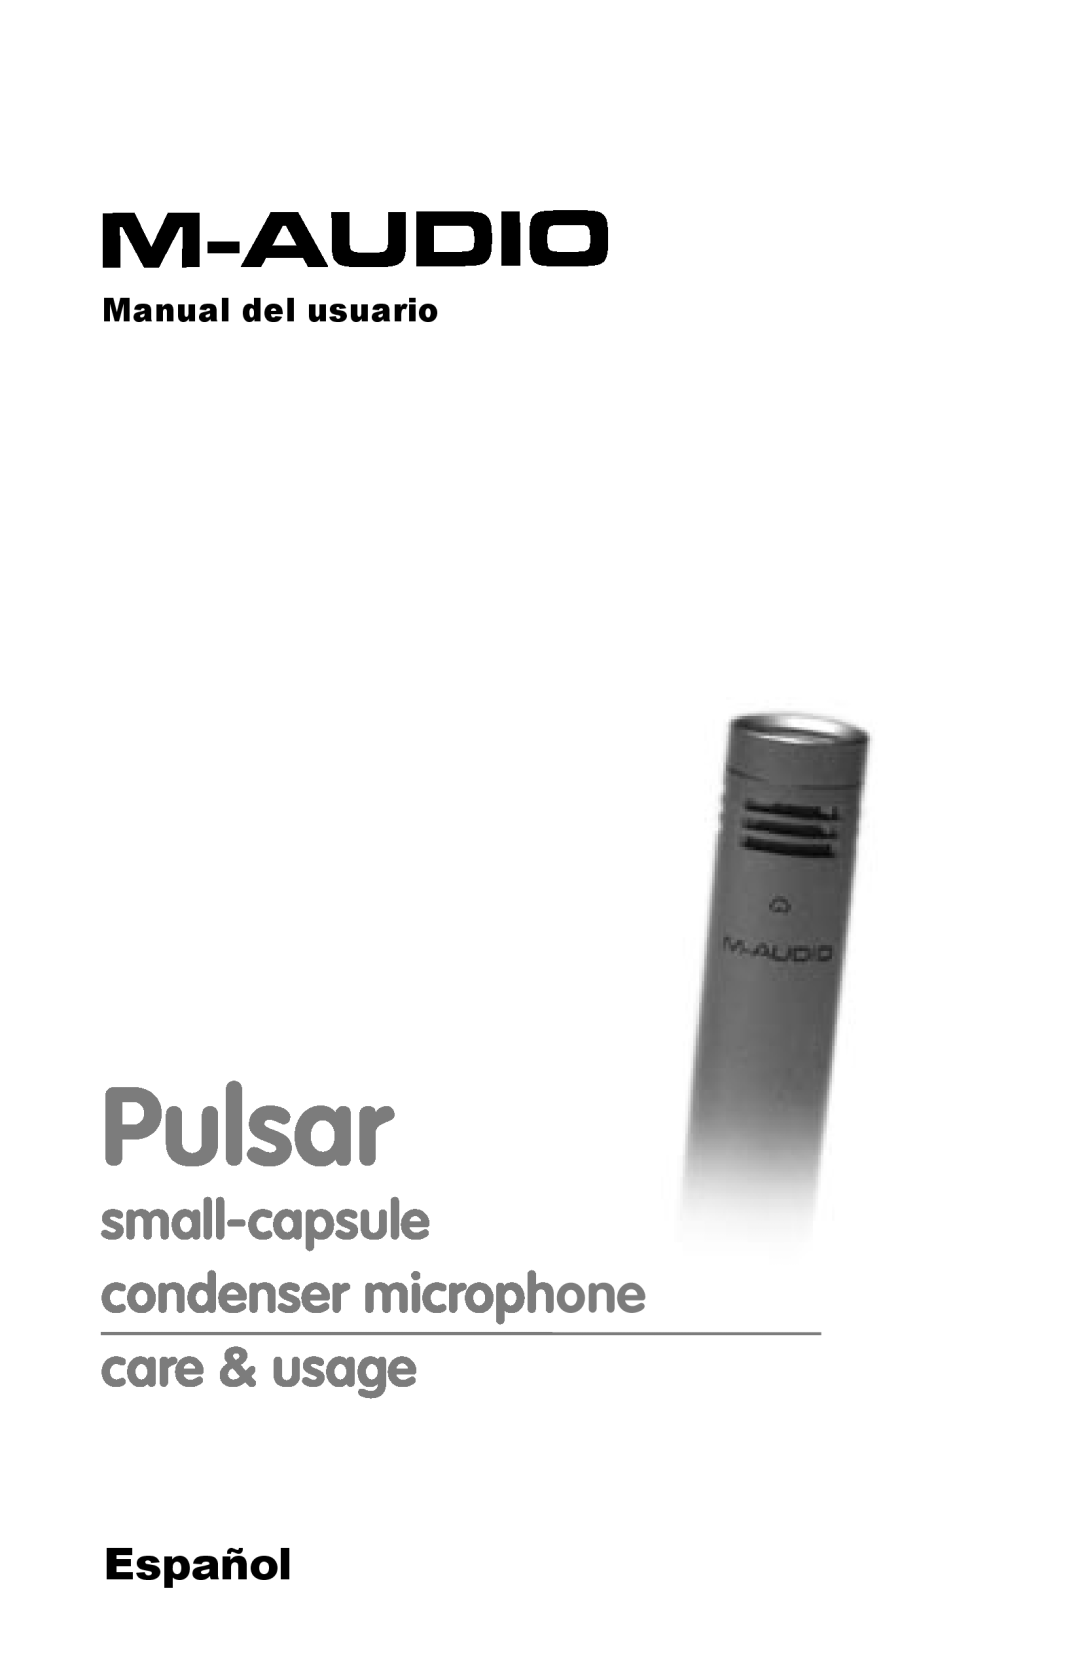 M-Audio manual Pulsar, AUDIOPHILE 192 PCI, uUserGuideguide, care & usage, small-capsule condenser microphone, English 